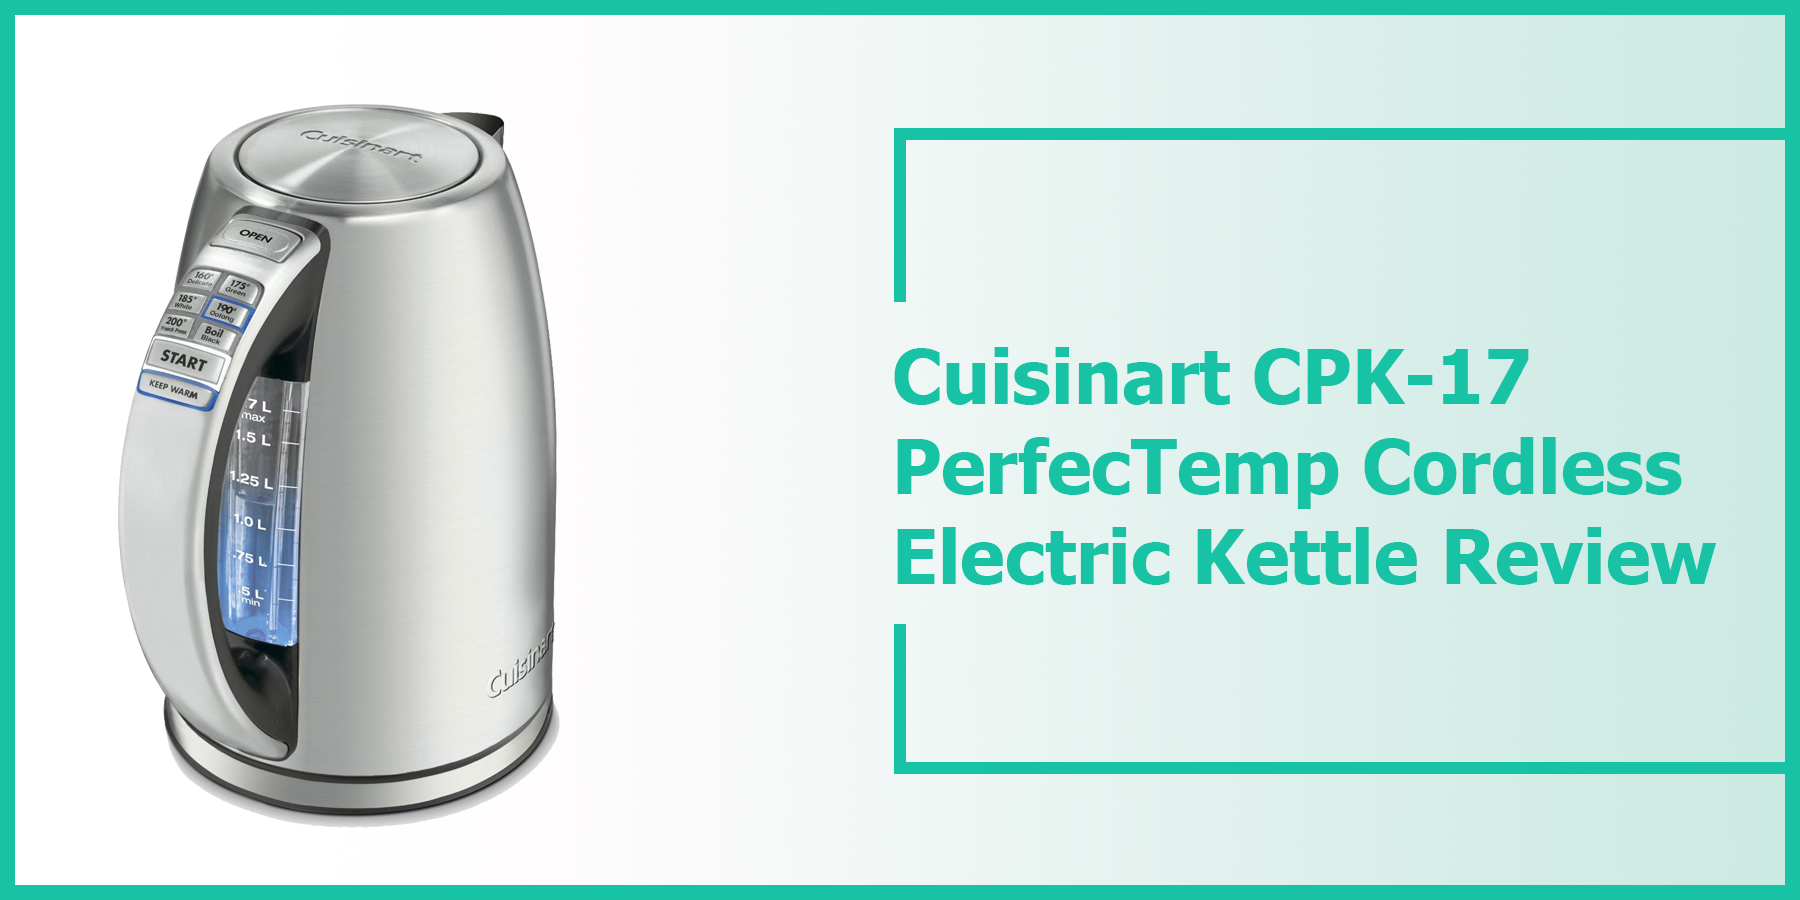 Cuisinart CPK-17 PerfecTemp Cordless Electric Kettle Review